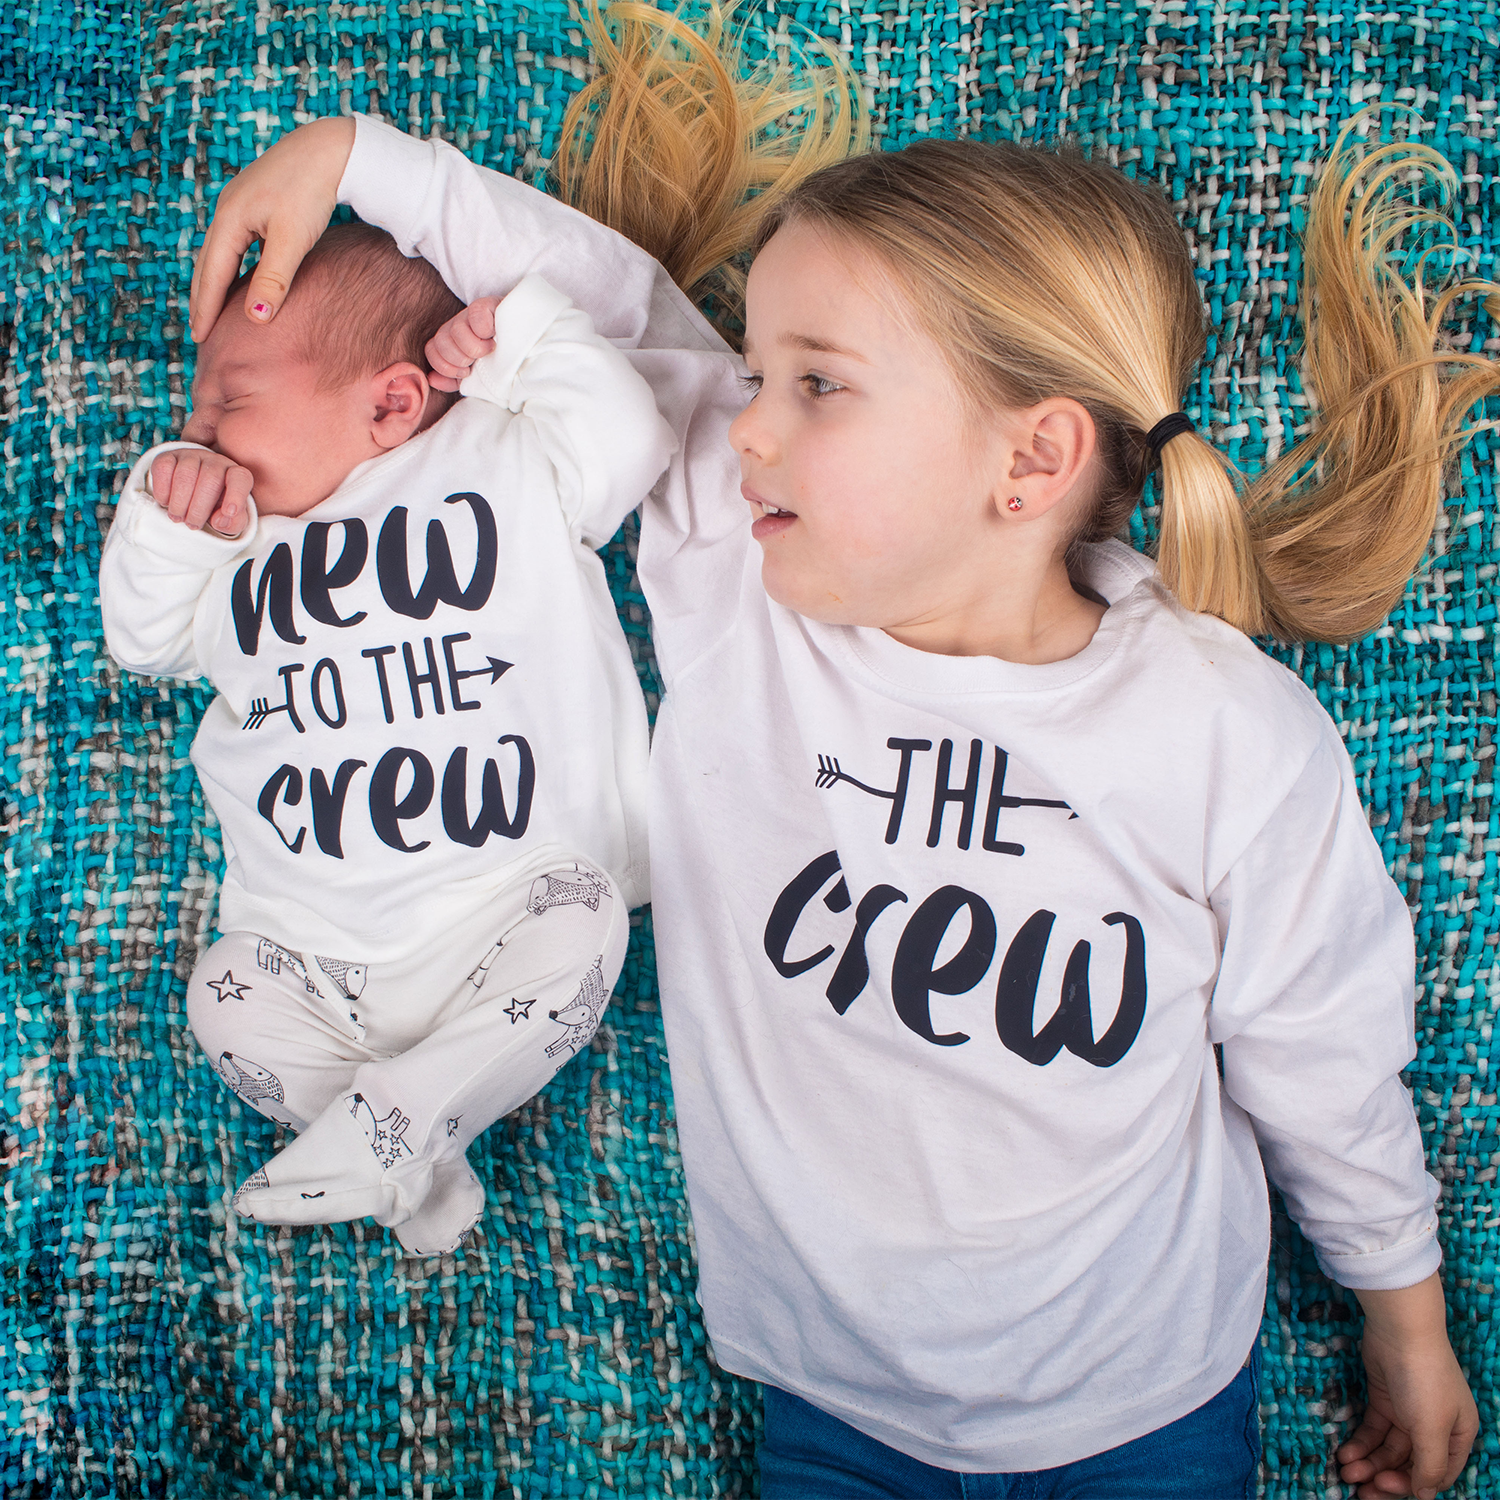 'The crew' kids longsleeve shirt